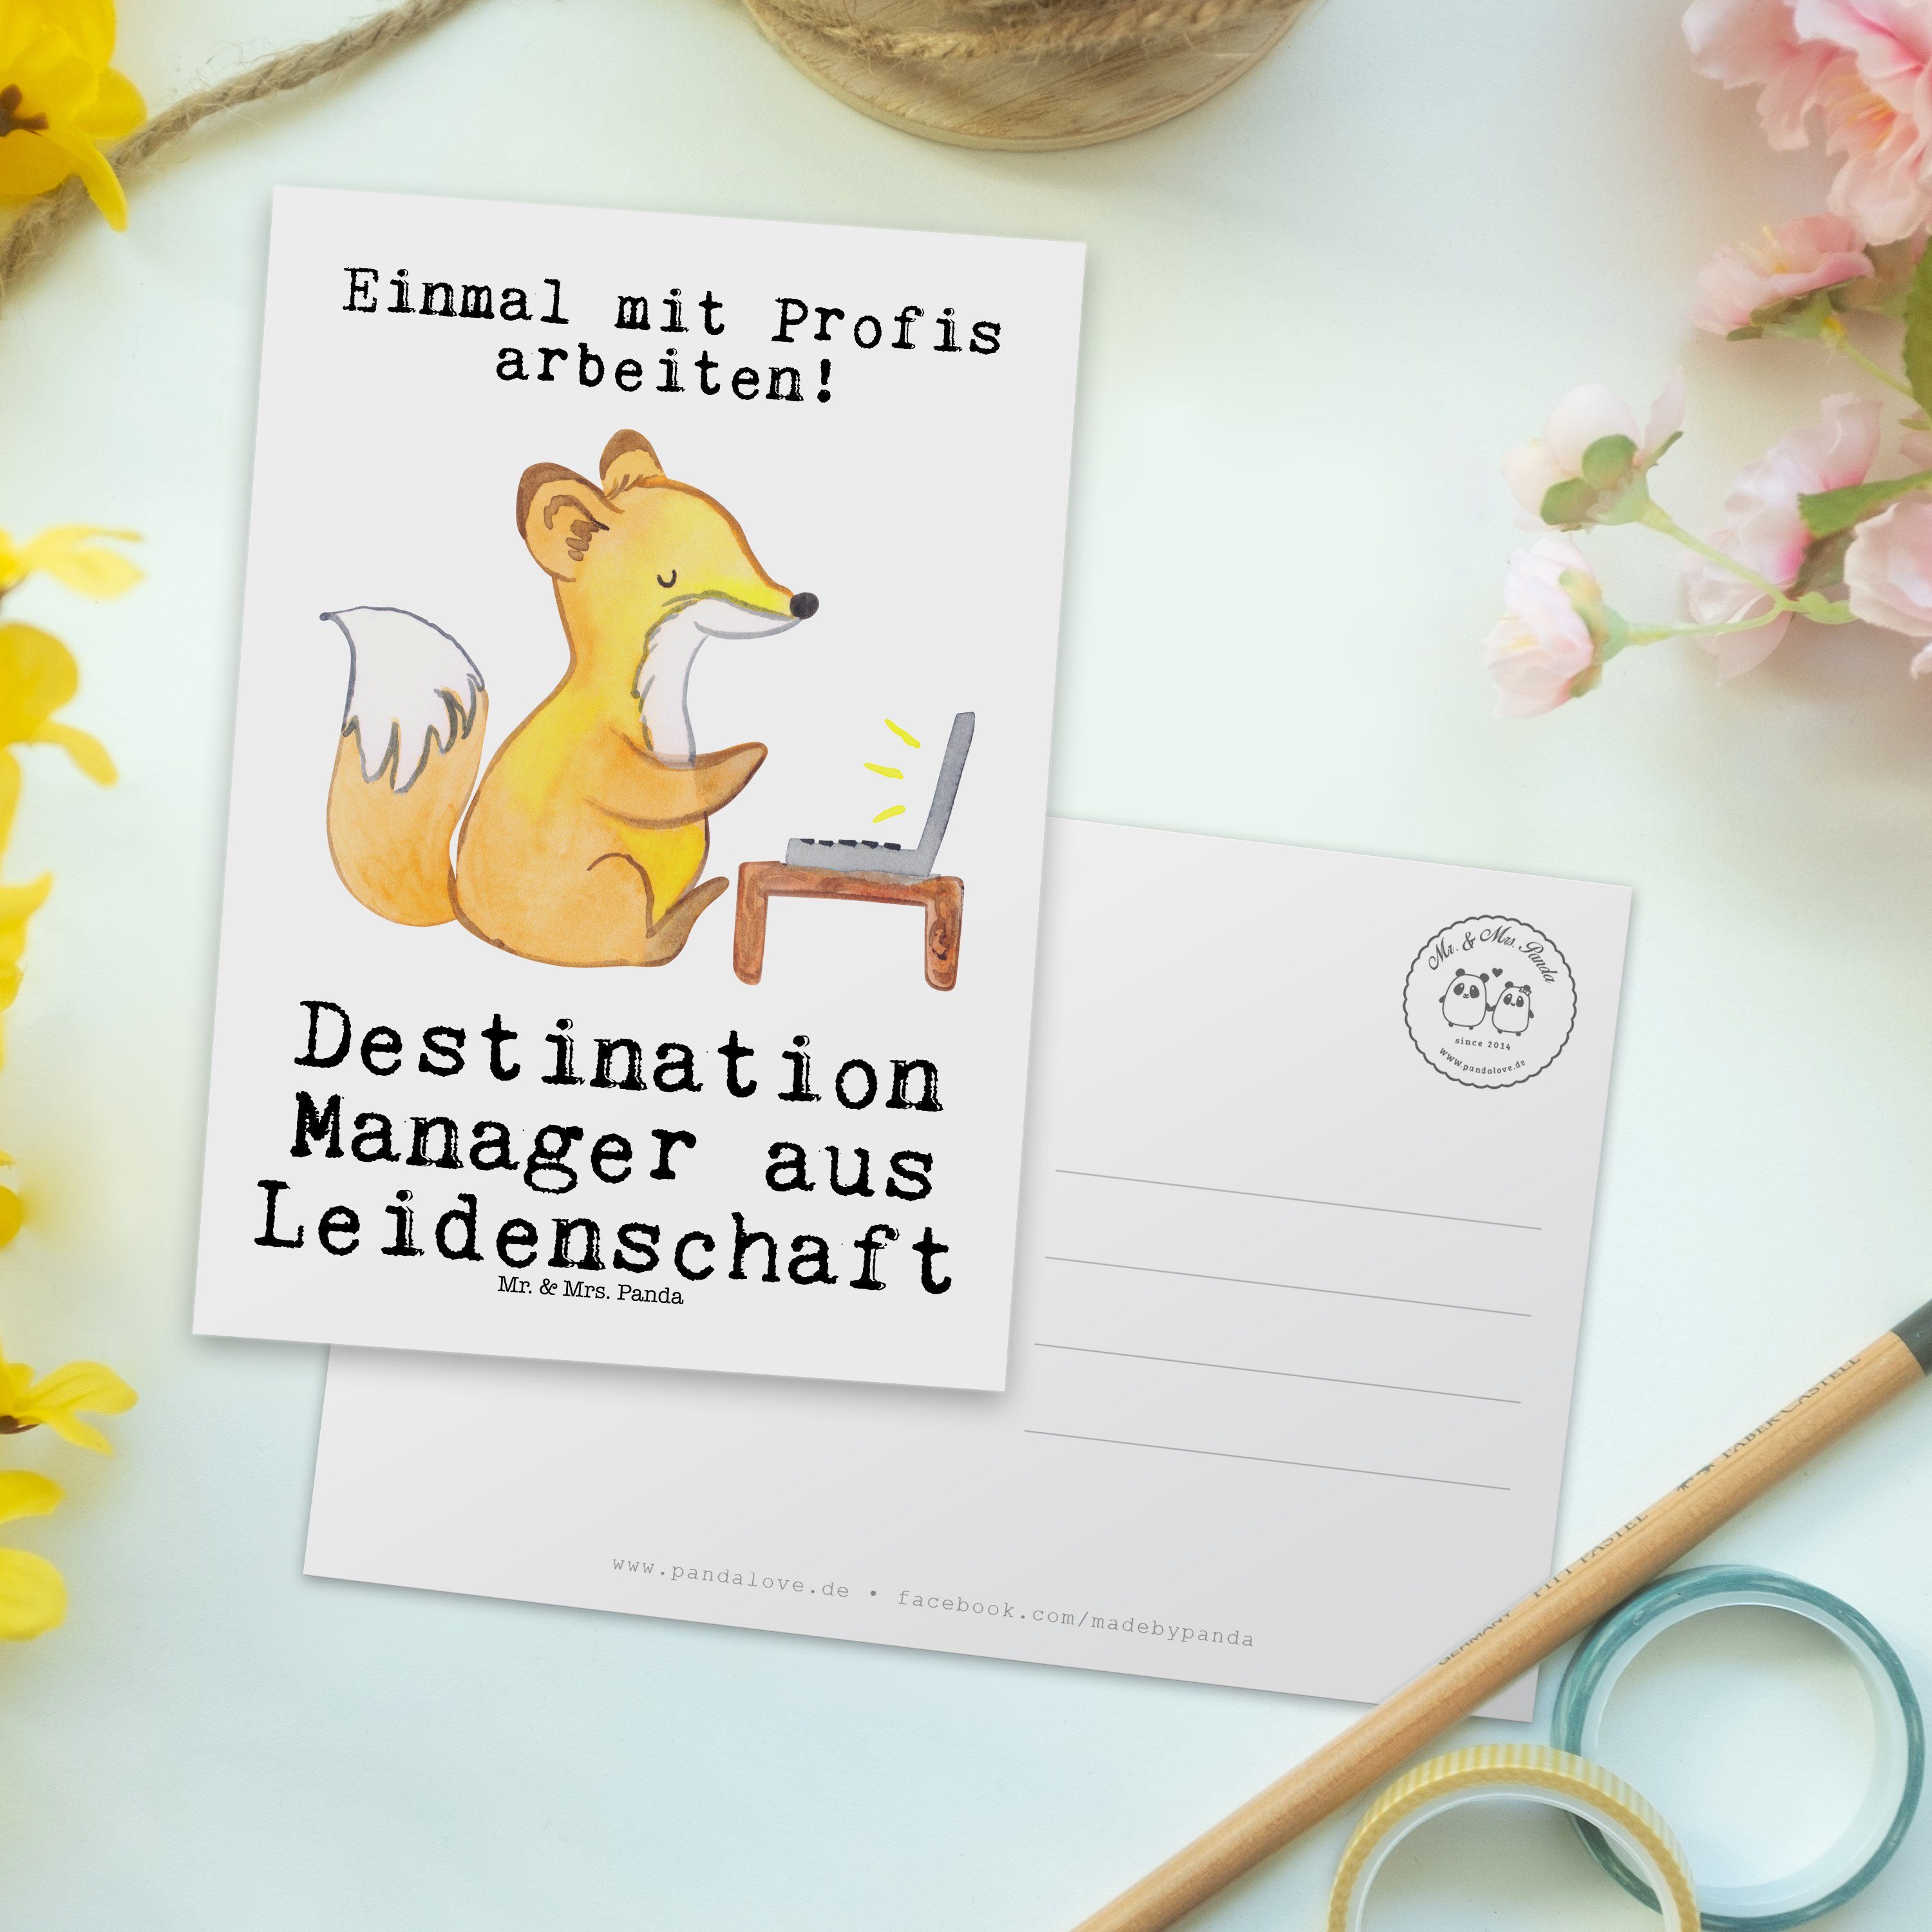 Destination Postkarte Geschenk, Leidenschaft Ar Manager - - & Mr. Grußkarte, Weiß Mrs. aus Panda